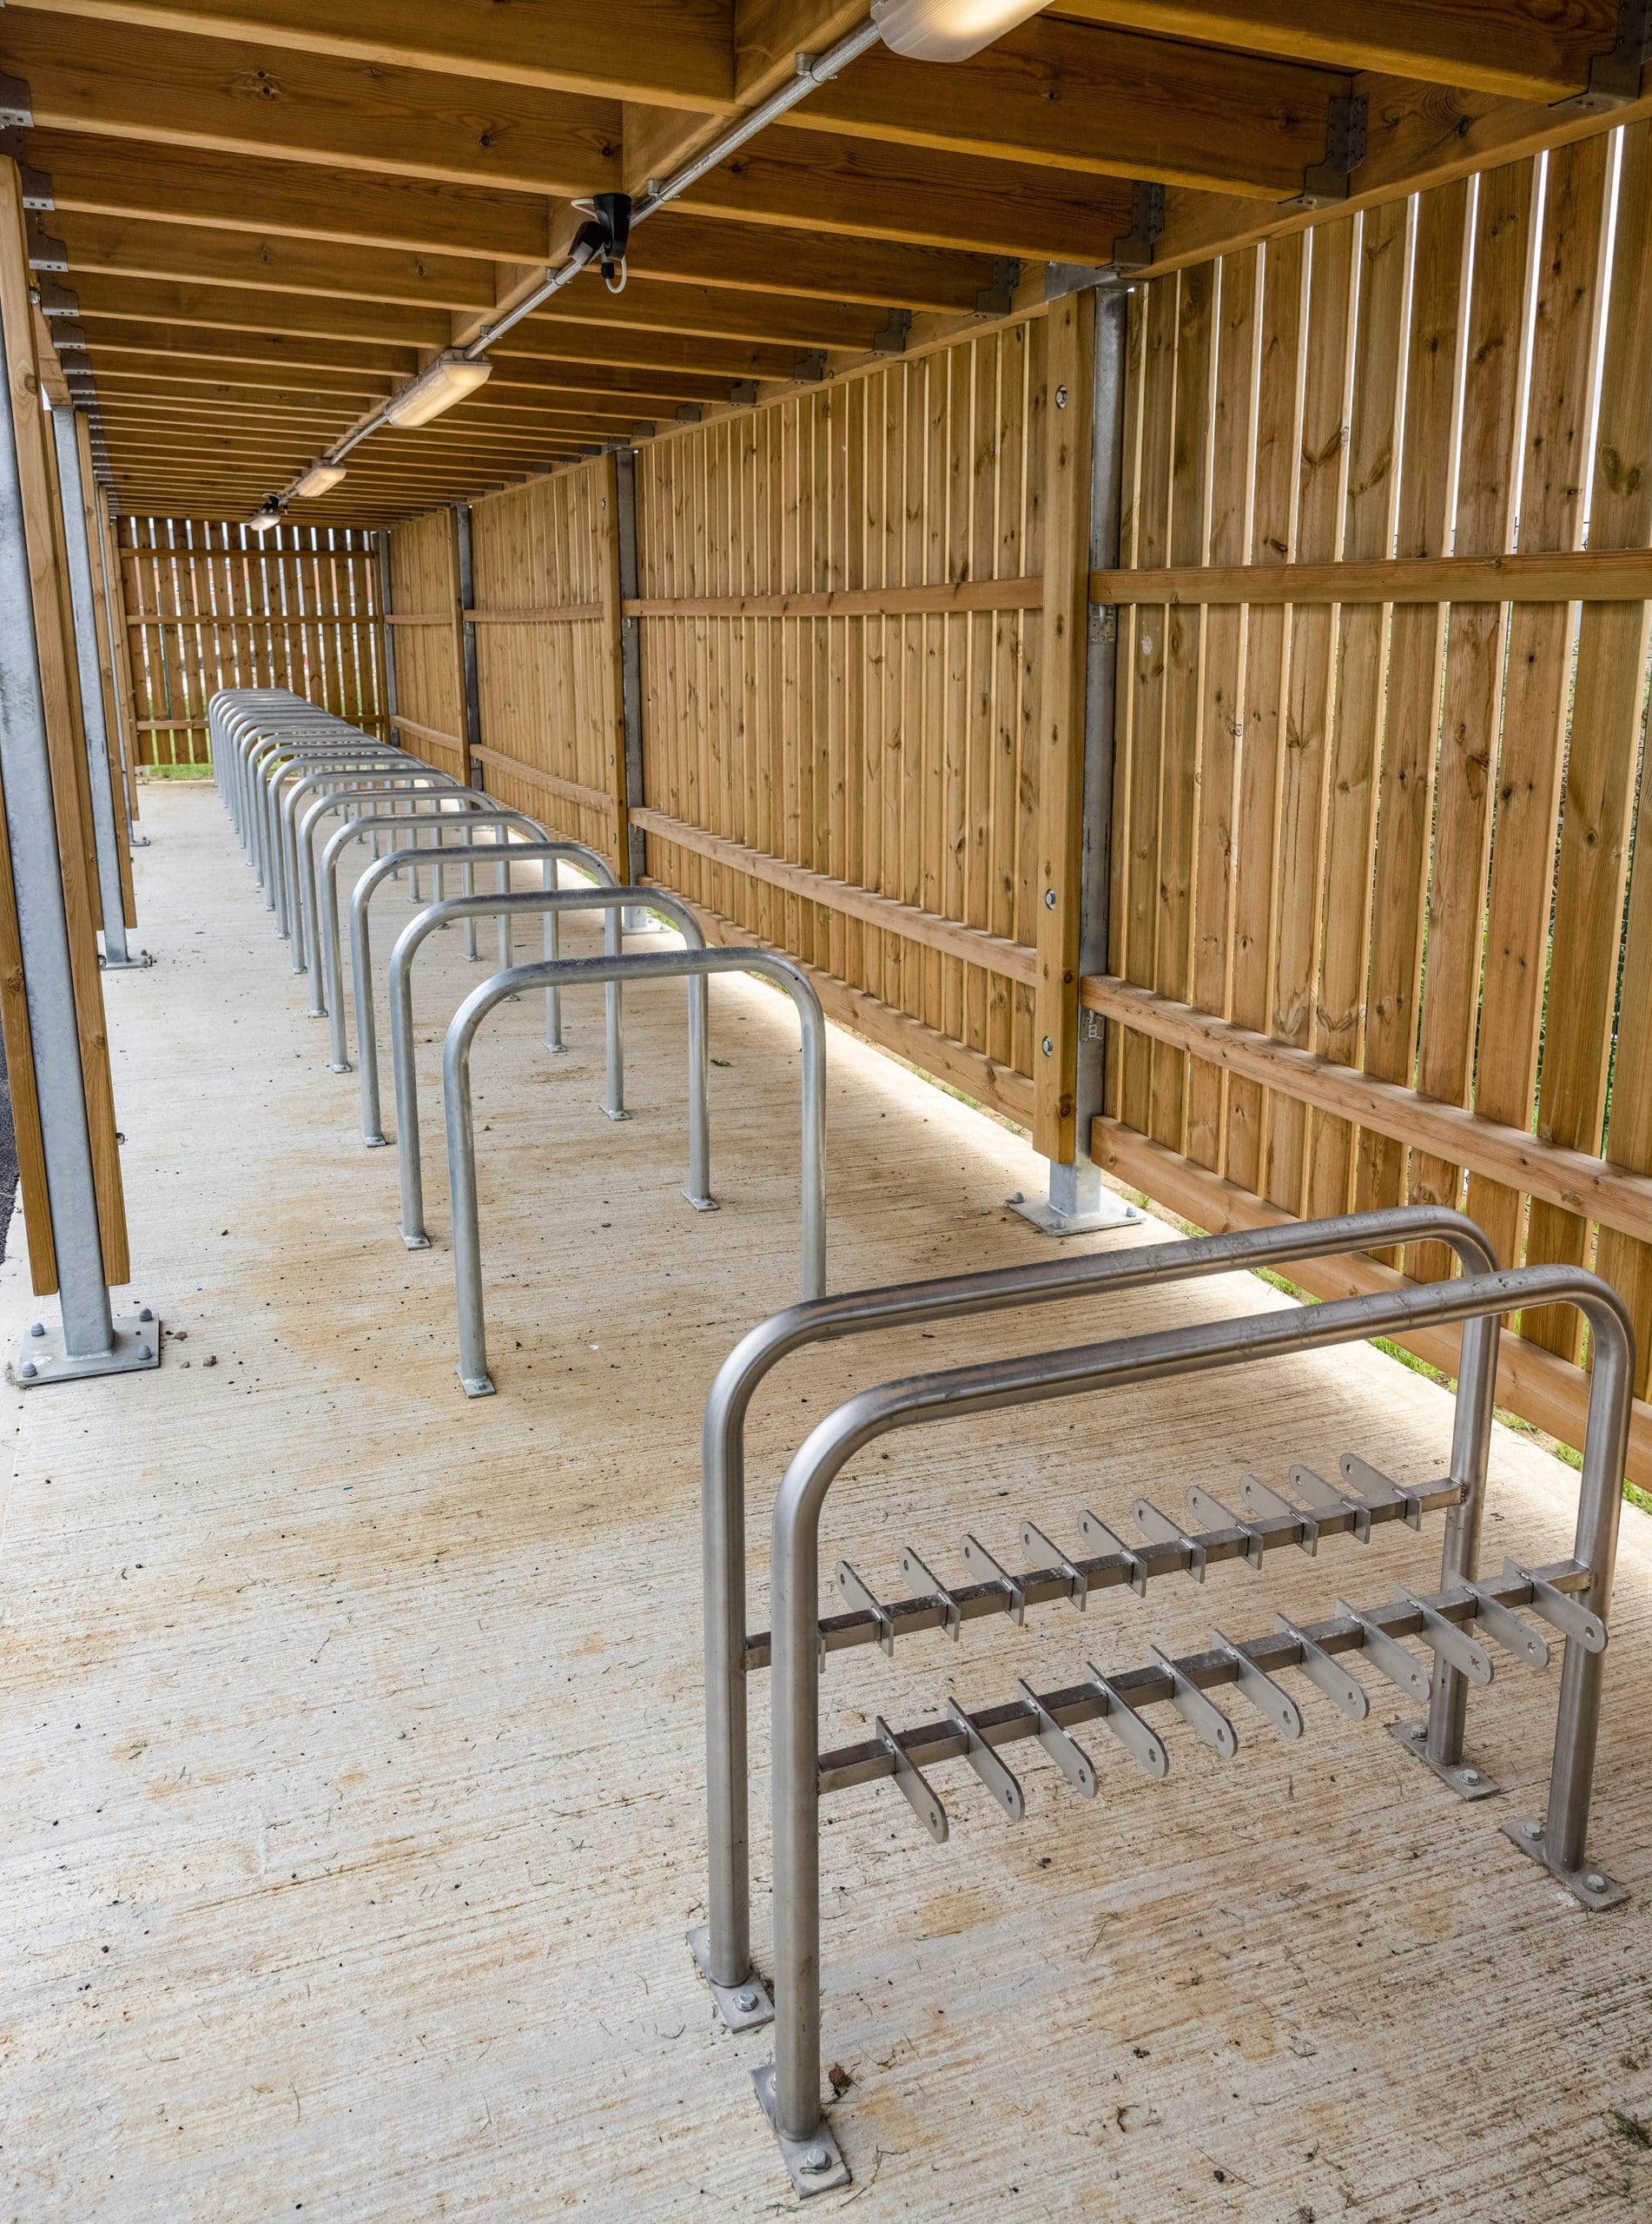 interior-of-wooden-bike-shelter-metal-bike-hoops